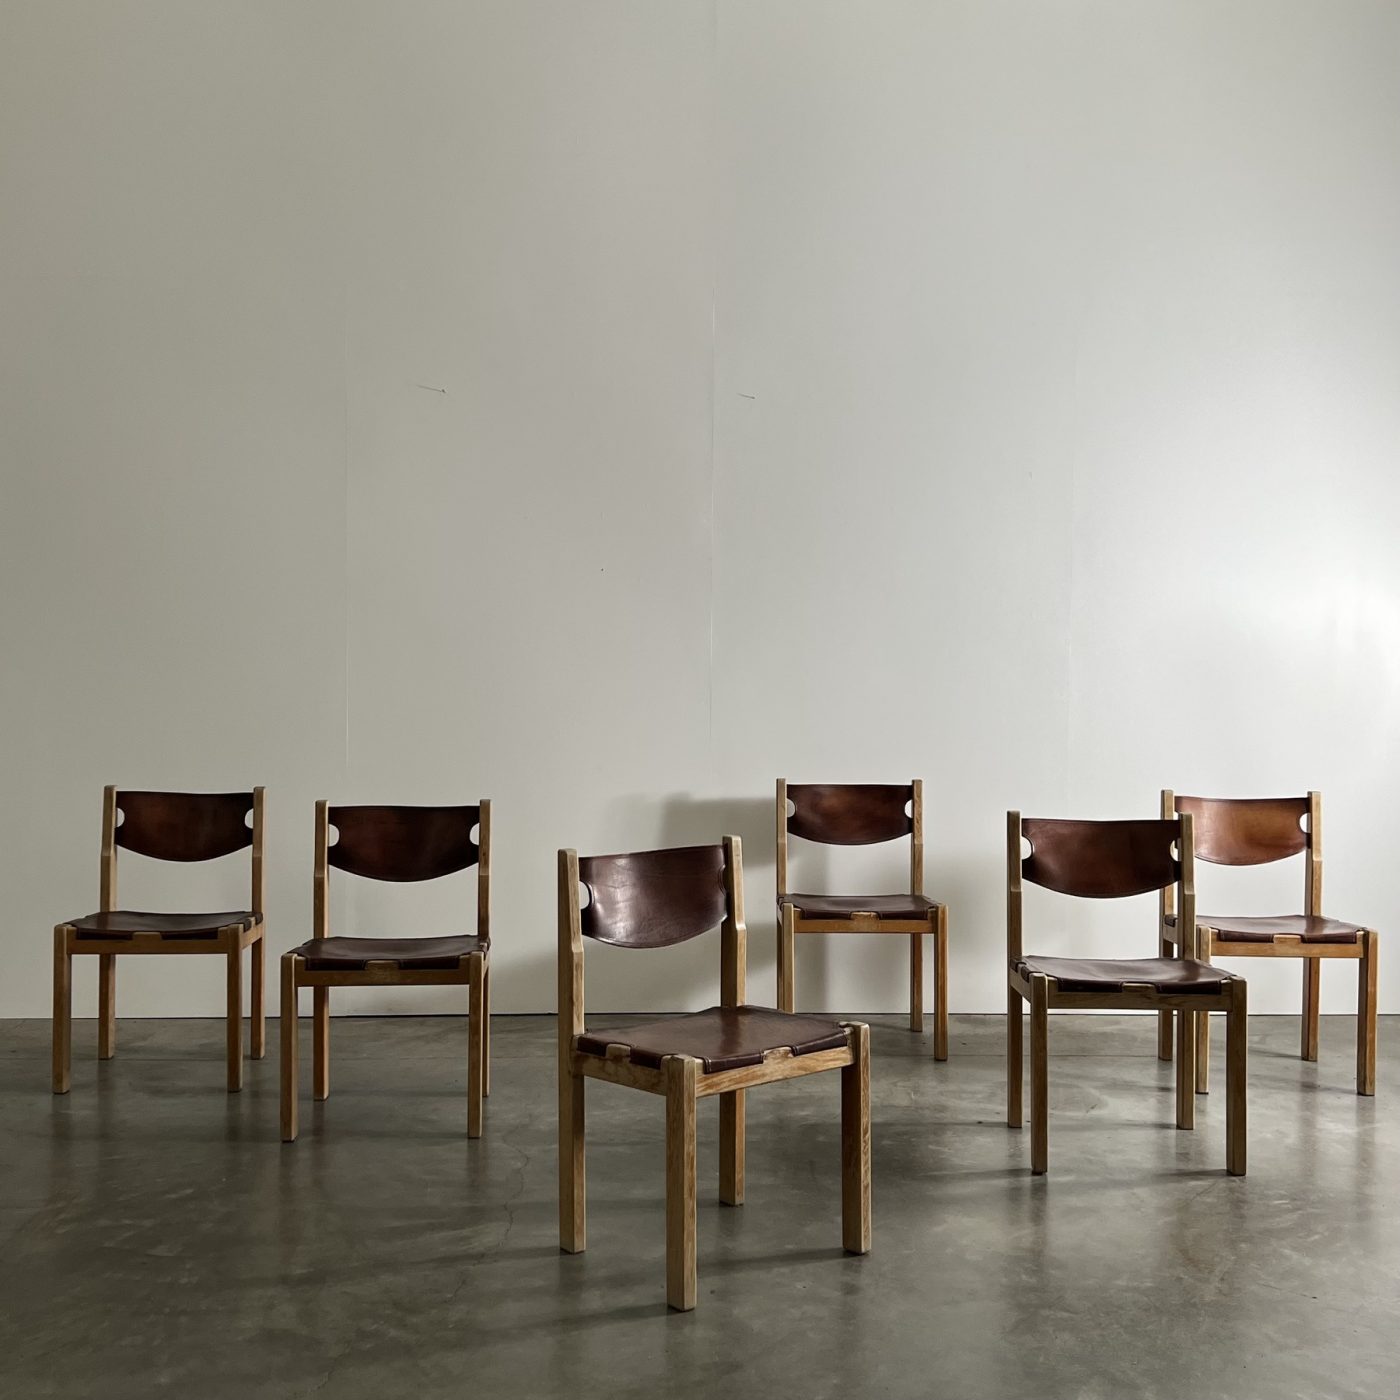 objet-vagabond-leather-chairs0008